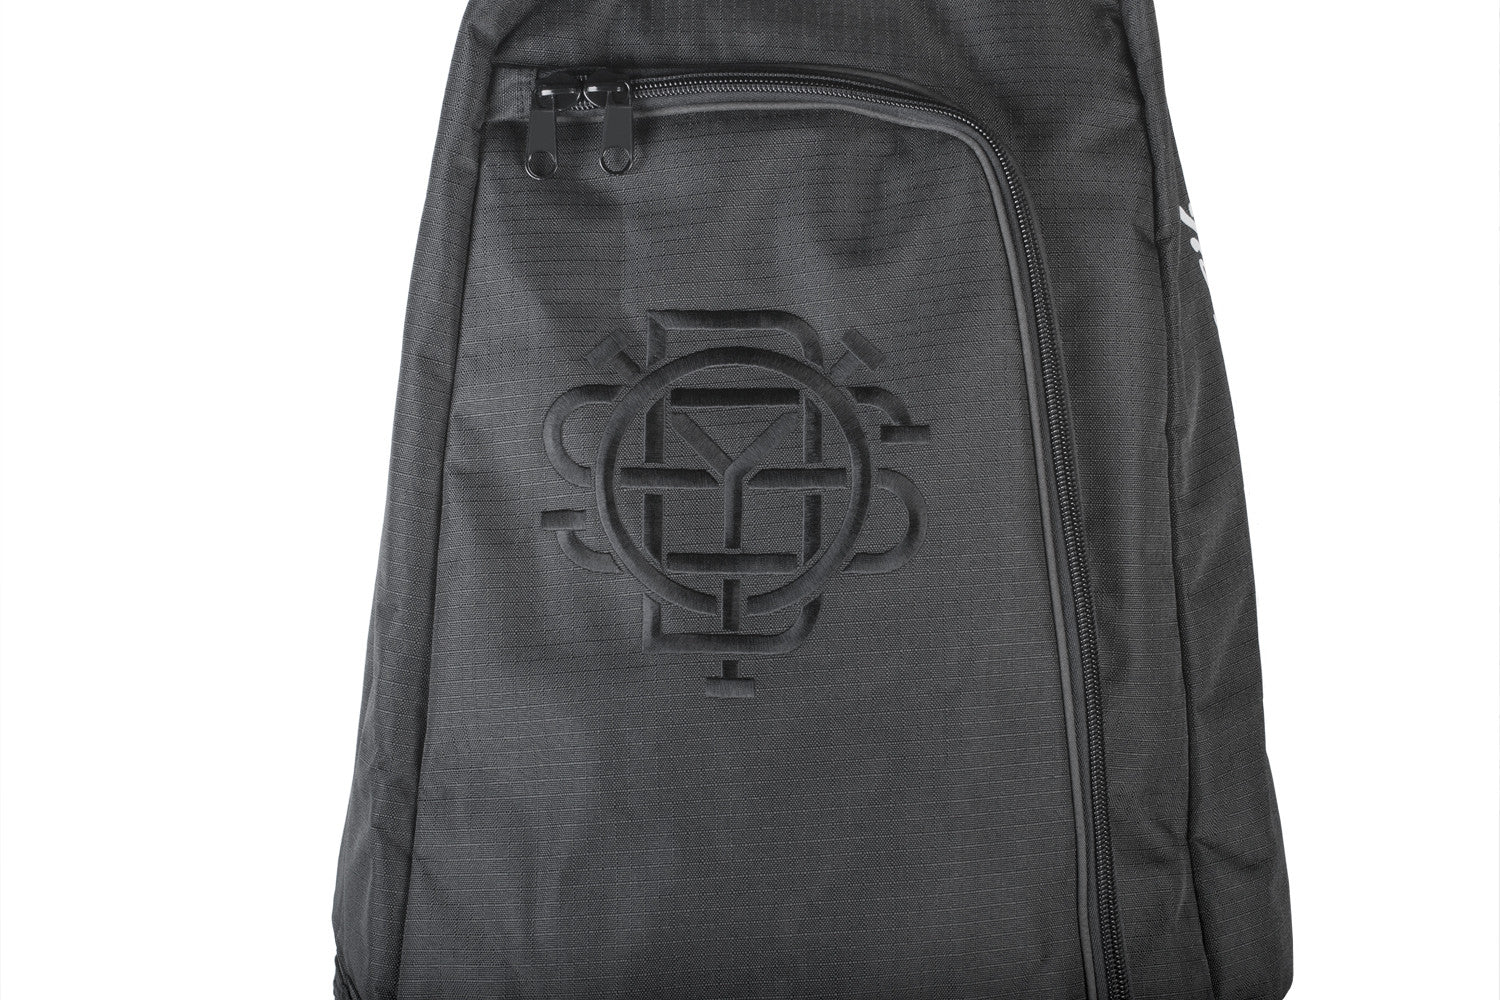 Monogram Bike Bag (Black)